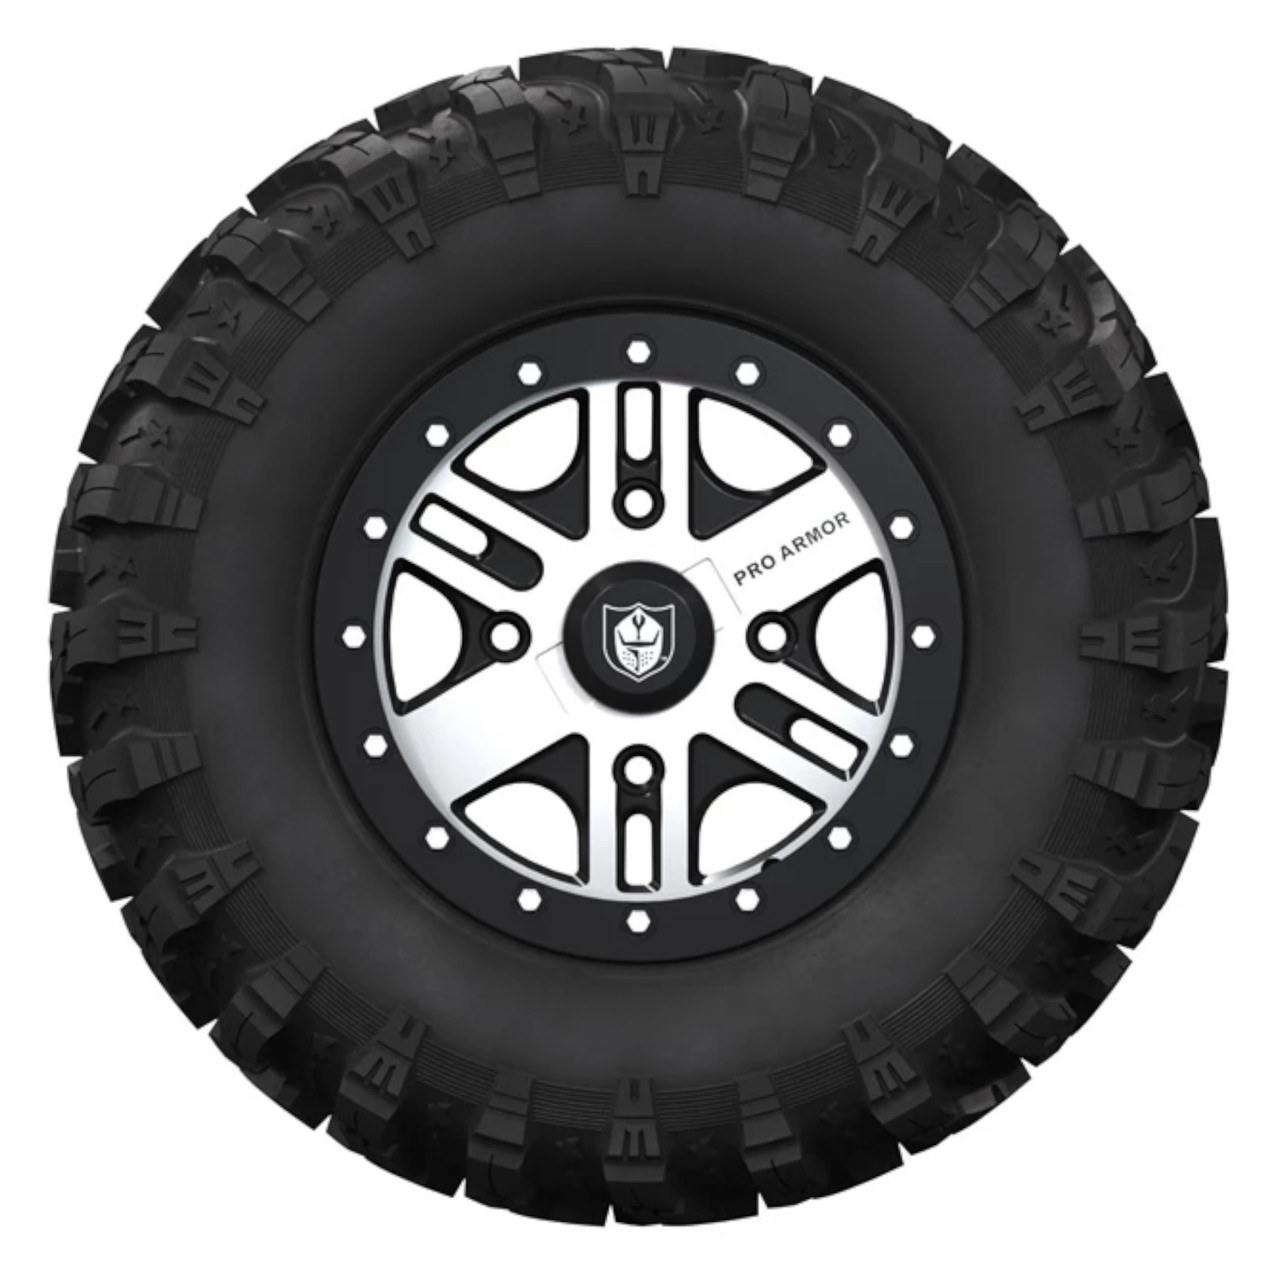 Polaris New OEM Pro Armor Wheel & Tire Set: X Terrain, 27 Inch Diameter, 2889970